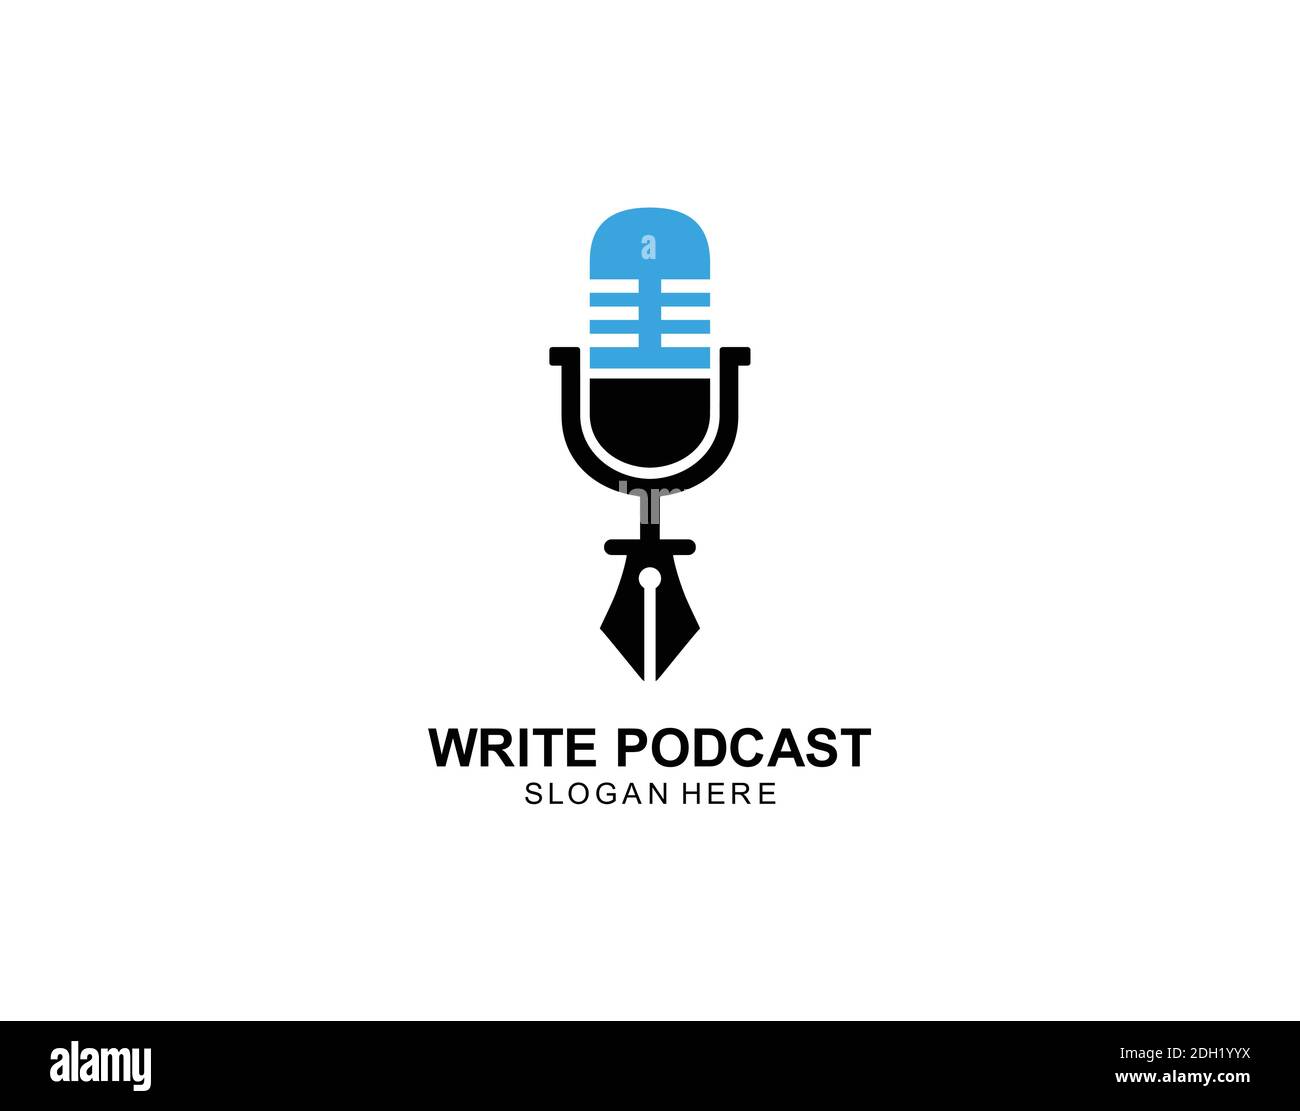 podcast pen logo icon symbol designs Stock Vector